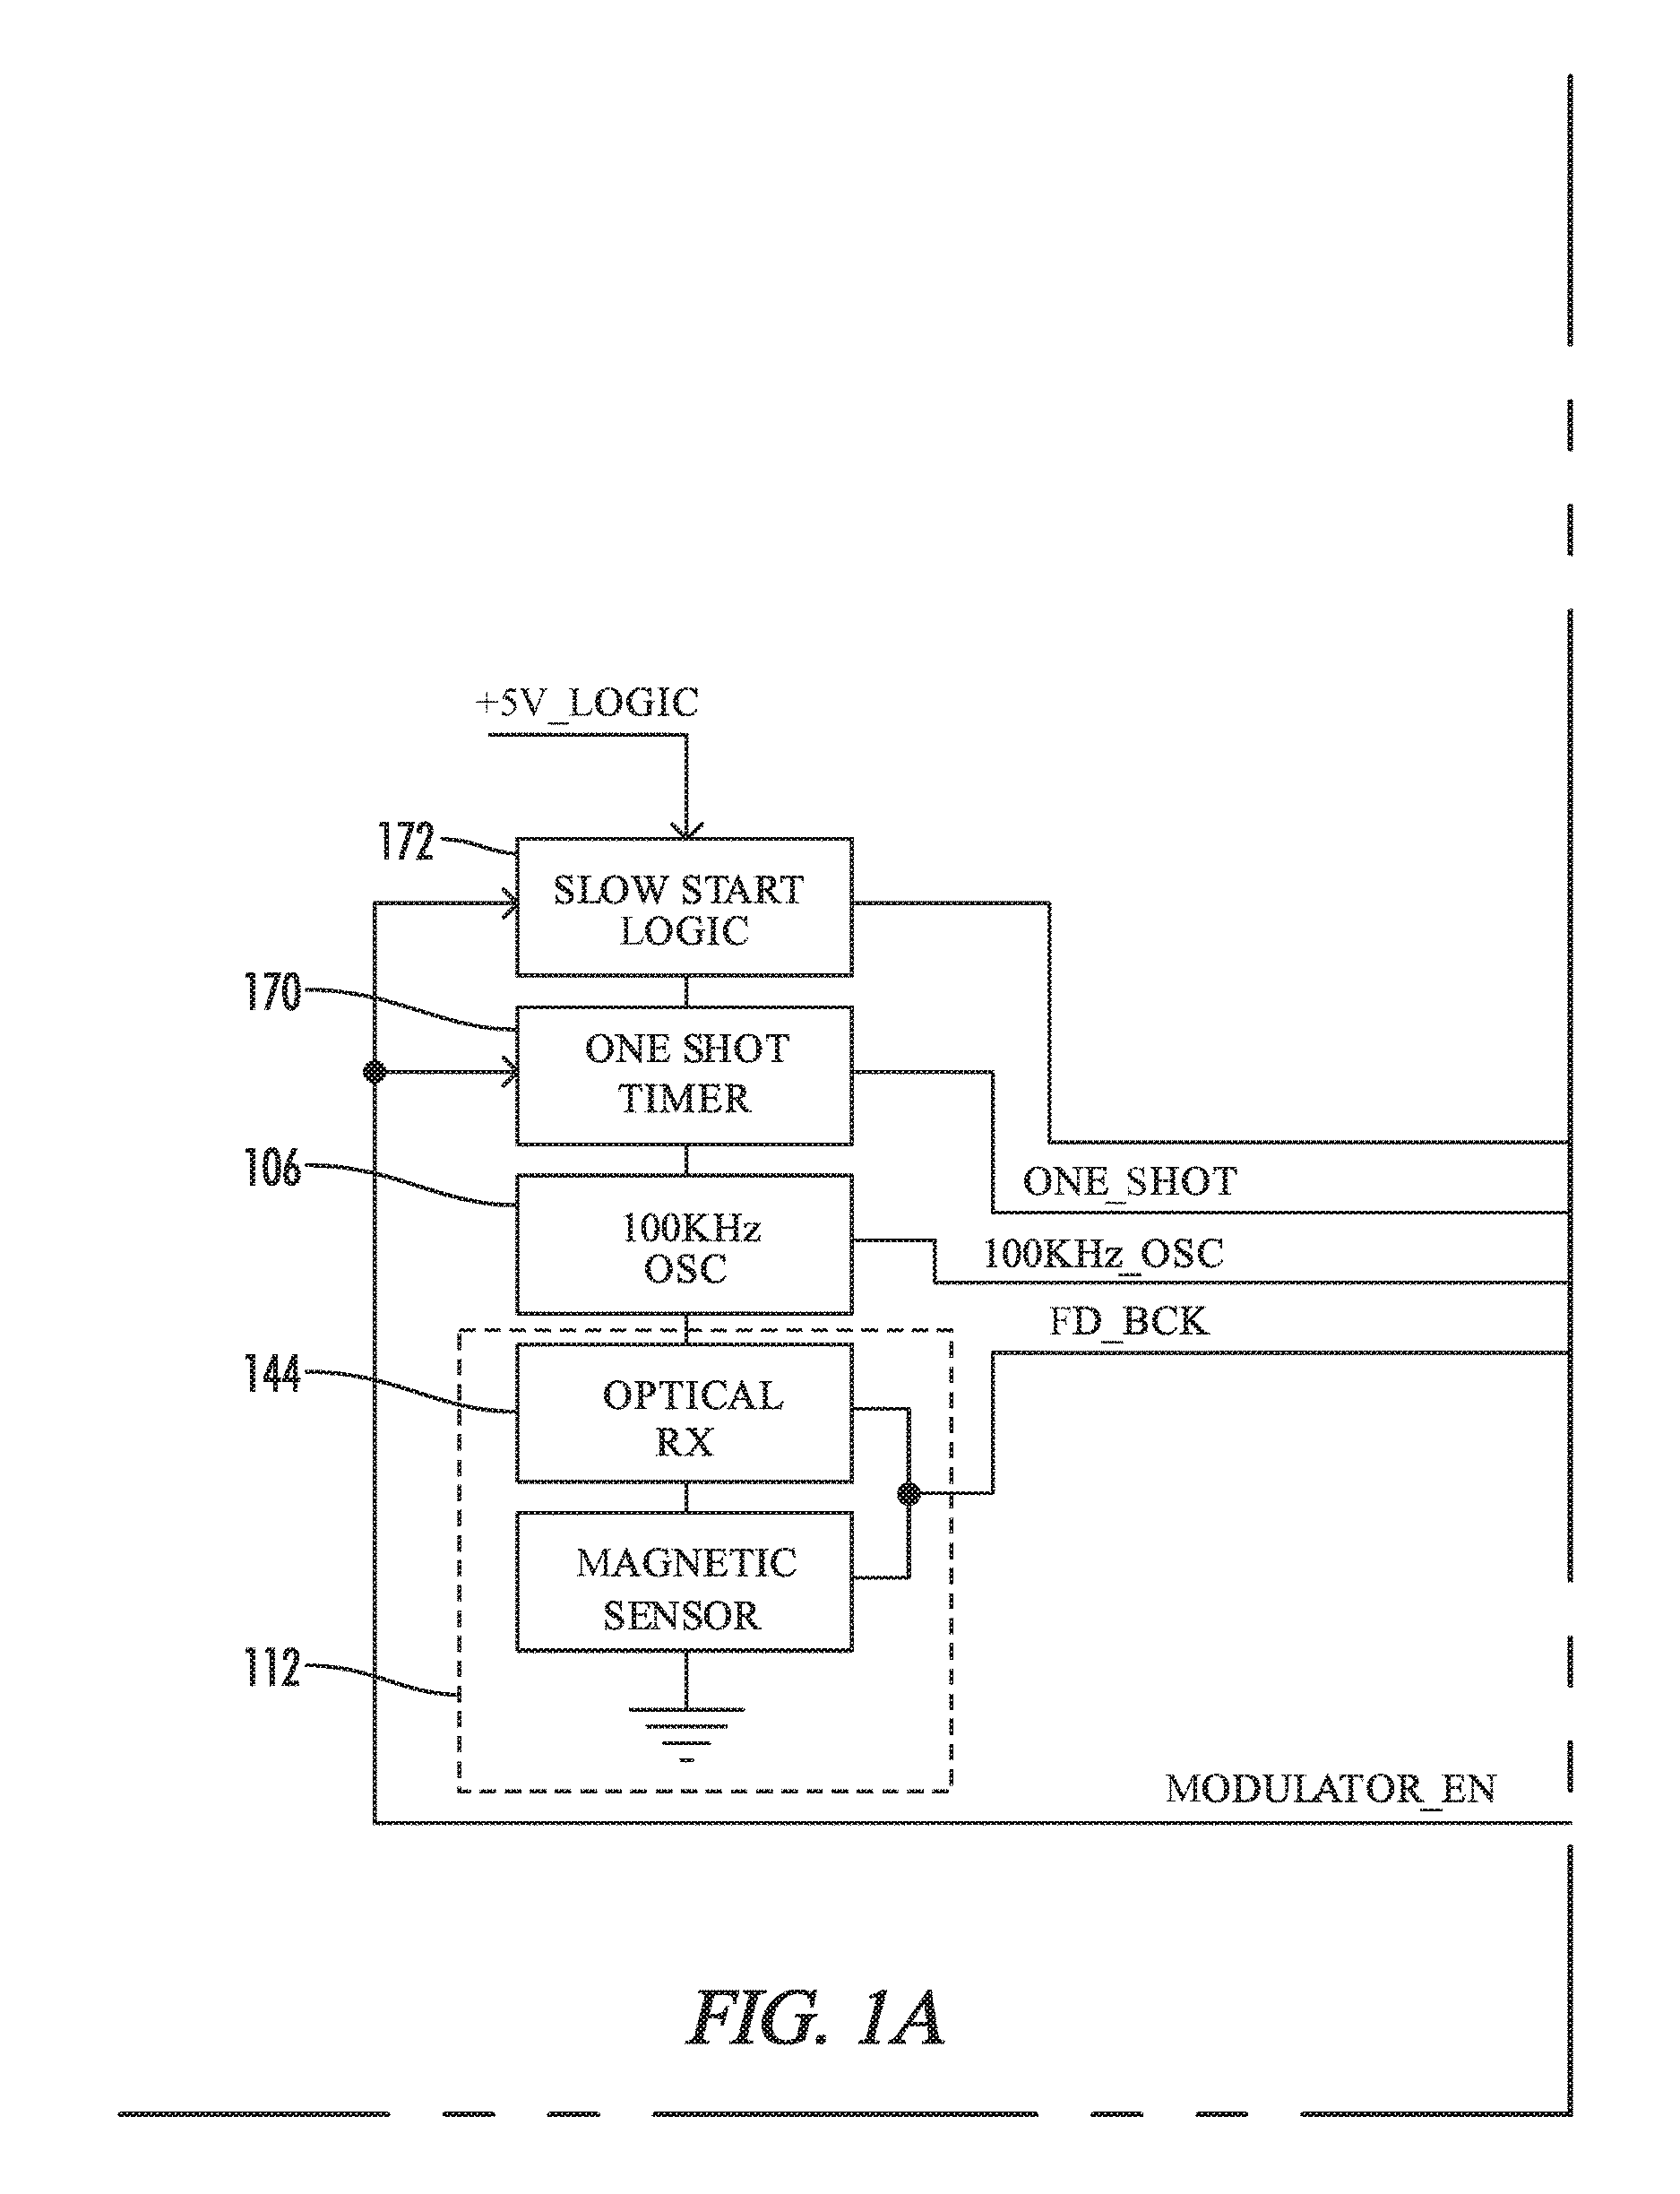 Proximity wireless power system using a bidirectional power converter